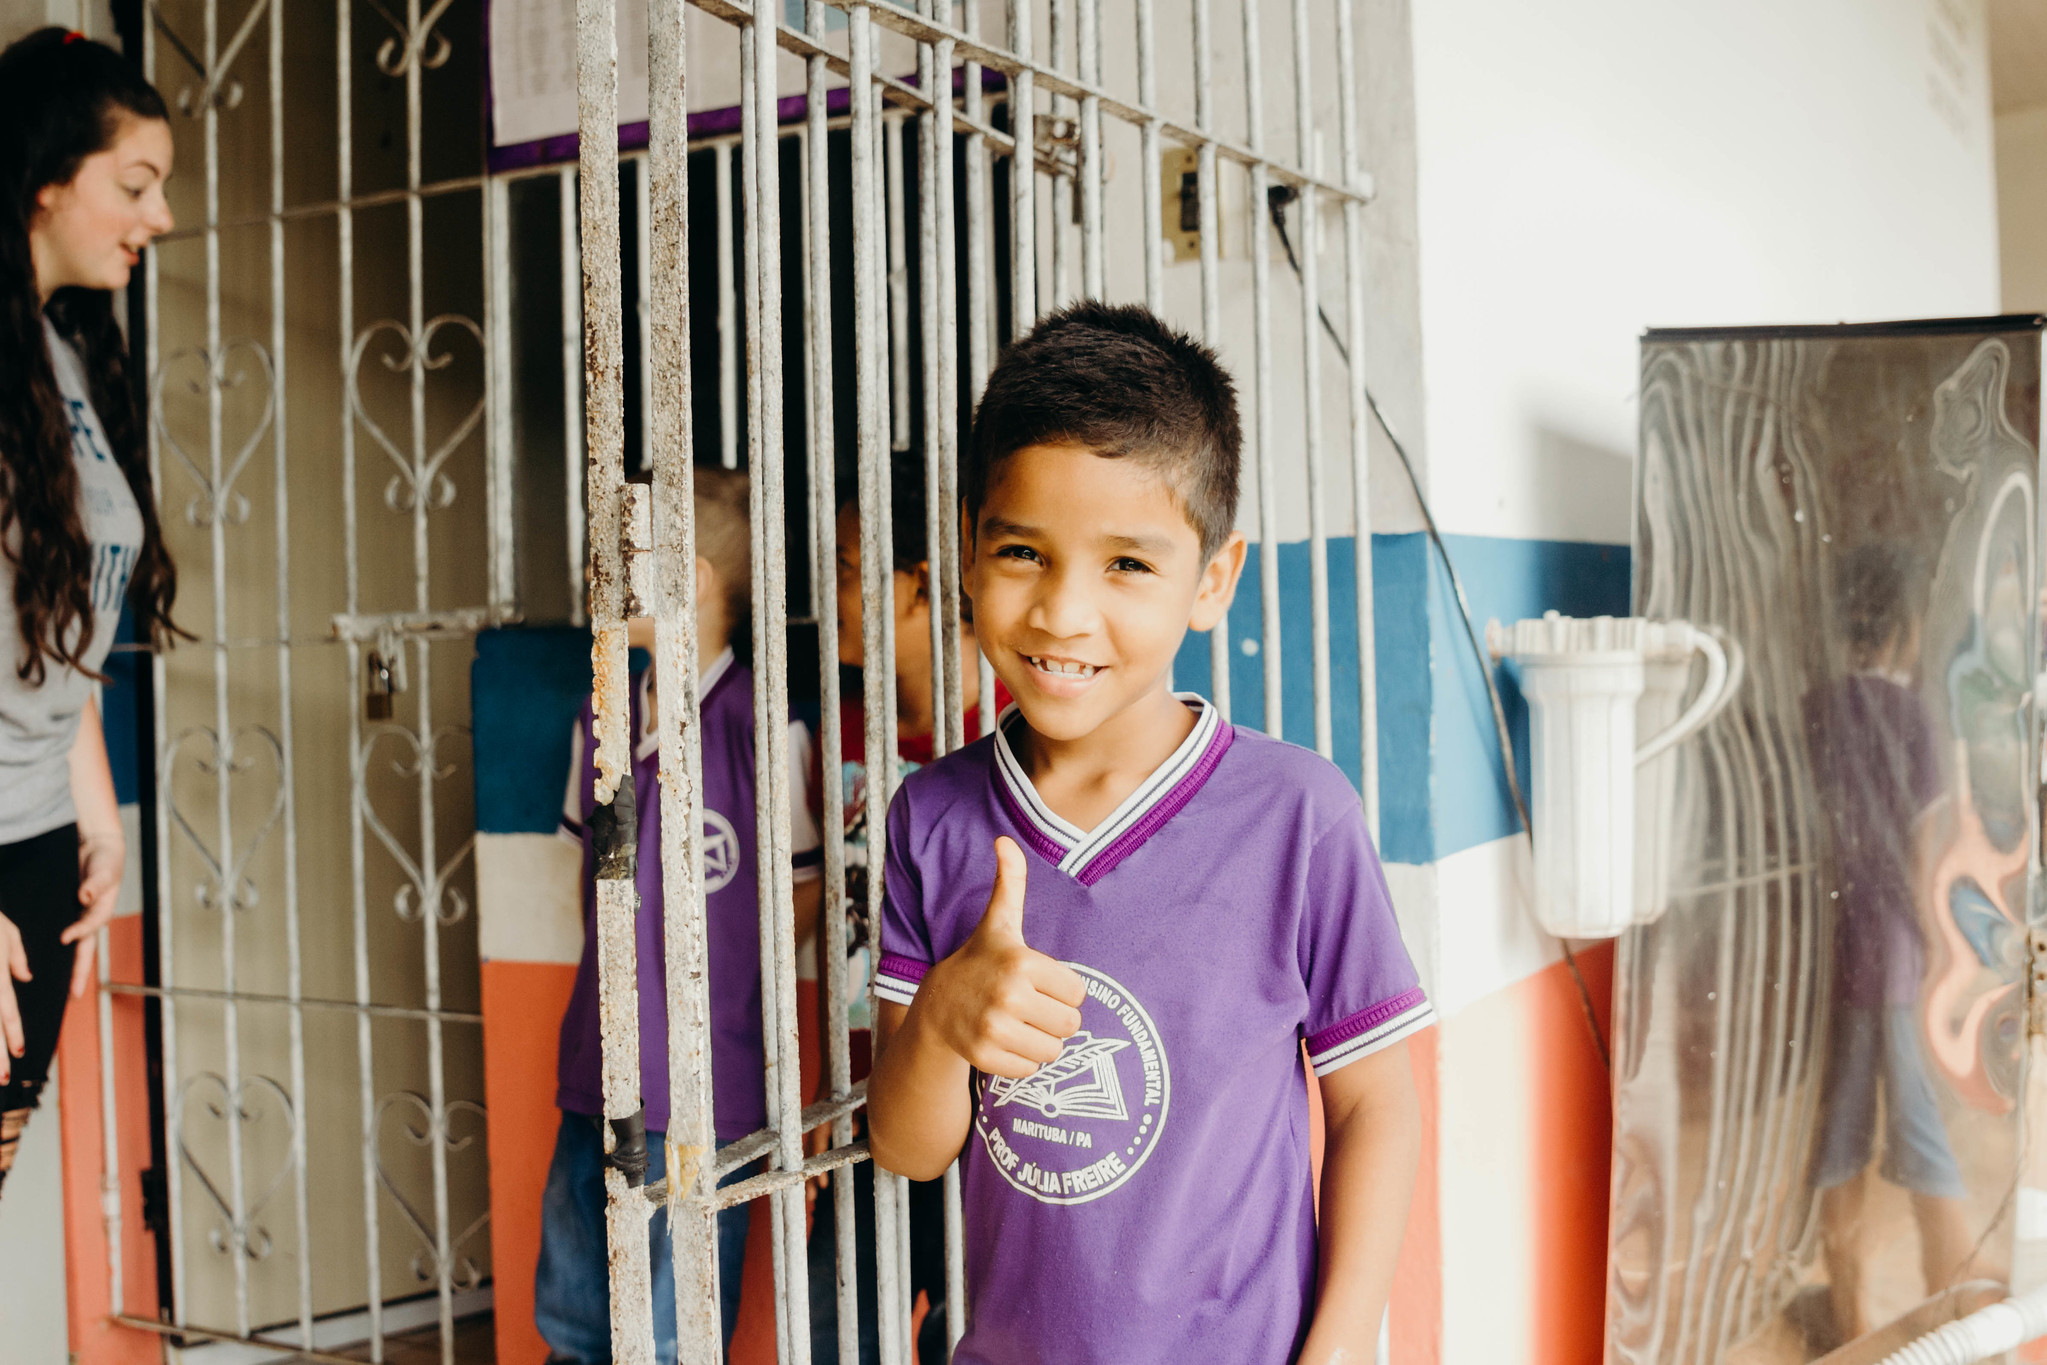 Brazilian Boy wearing a purple shirt and giving a thumbs up.